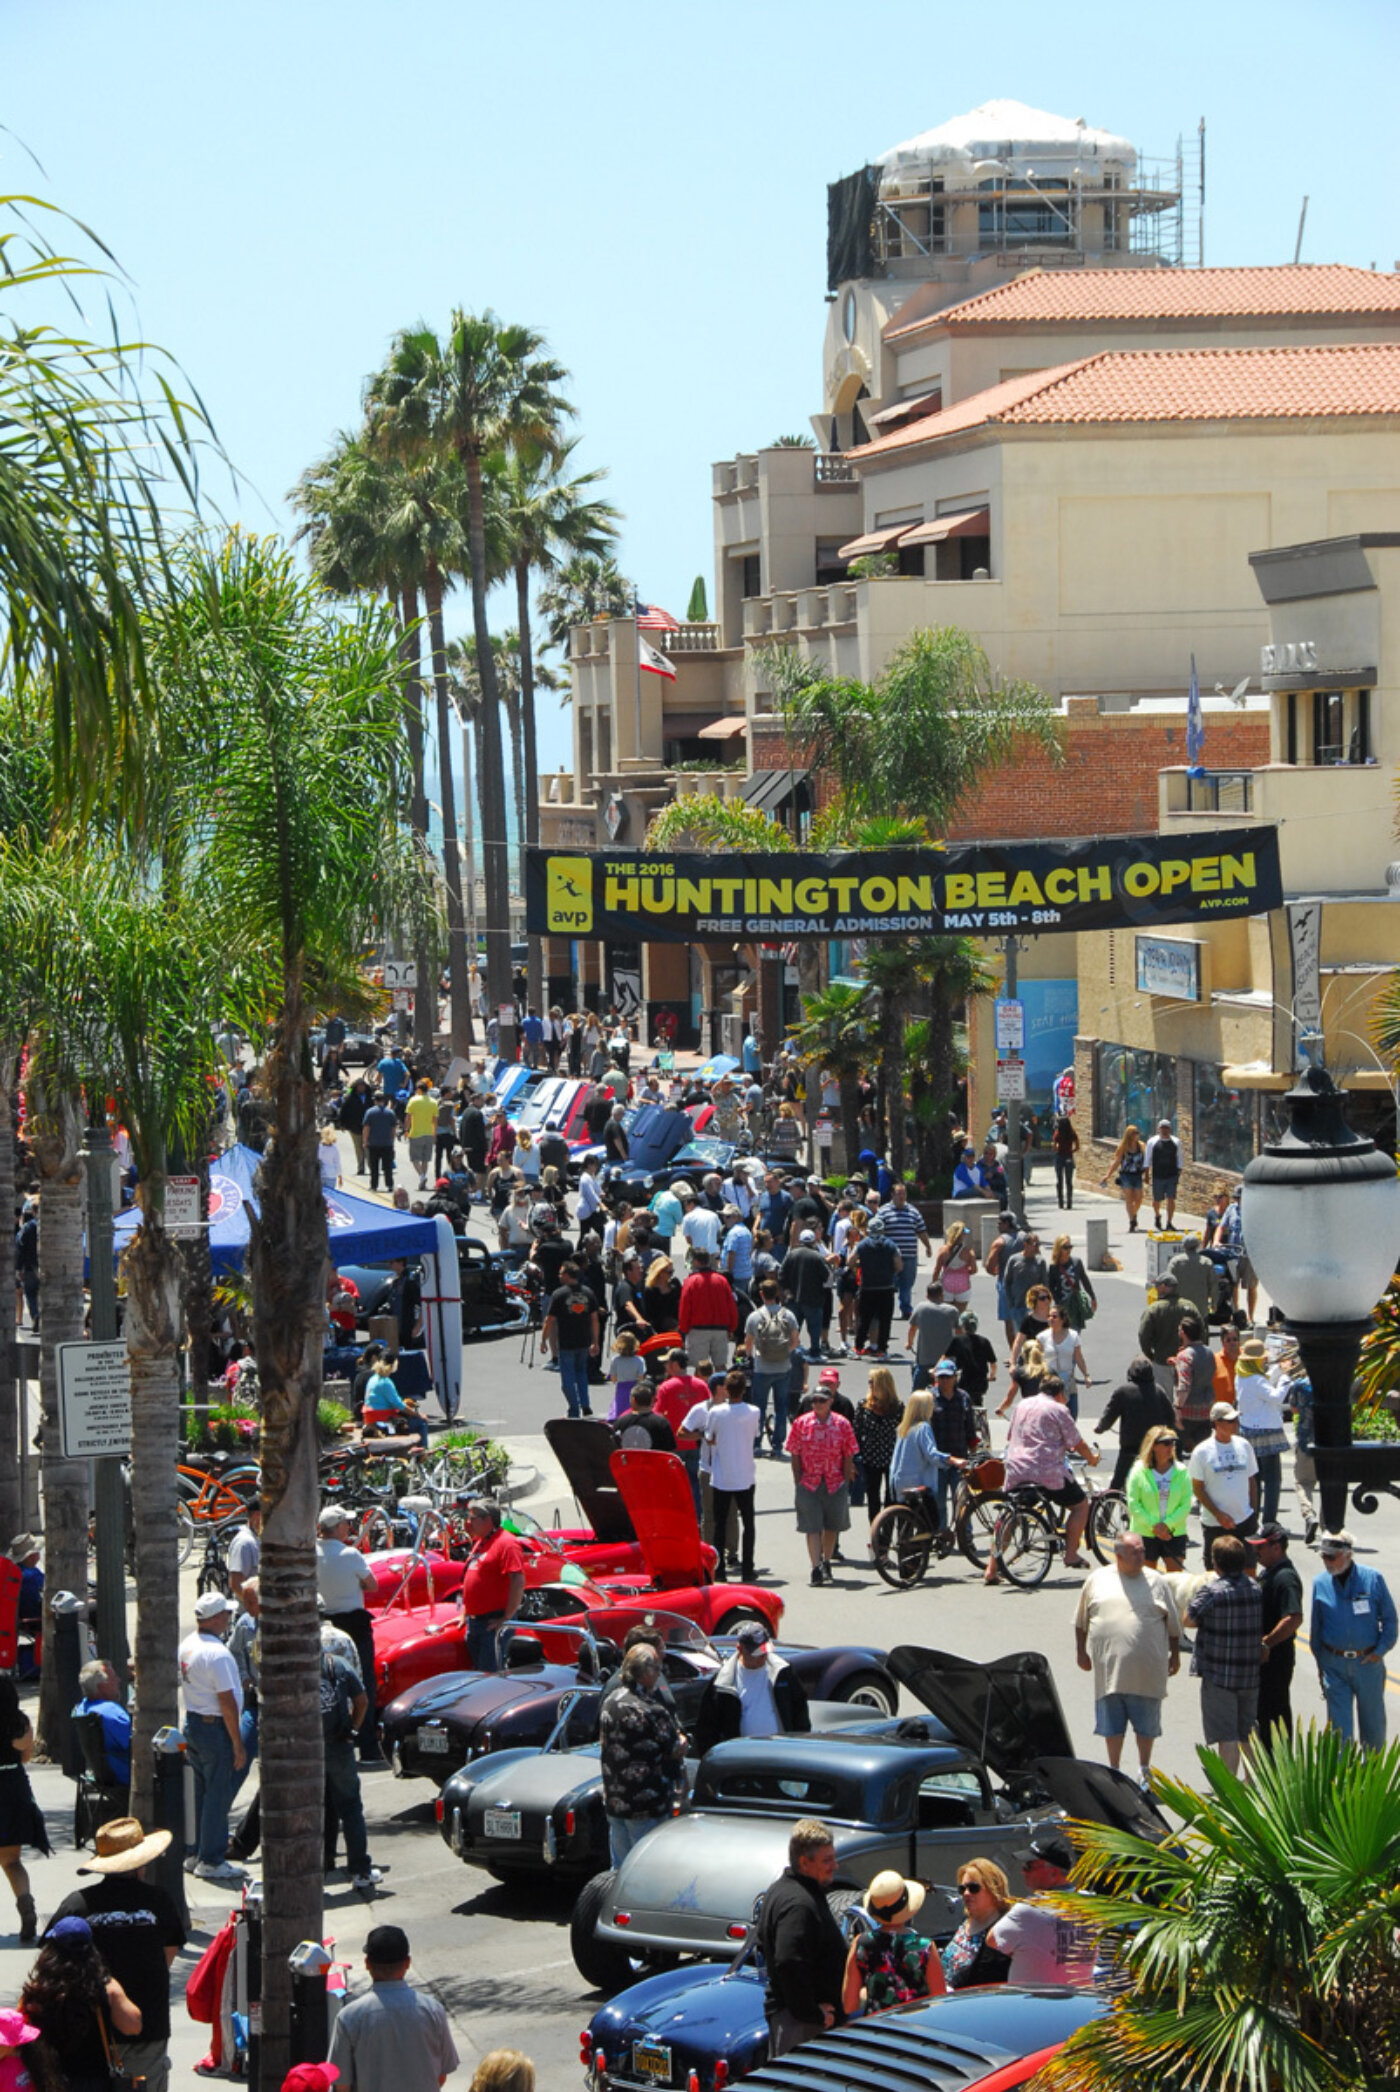 						2016 Ffr Huntington Beach Car Show 1
			